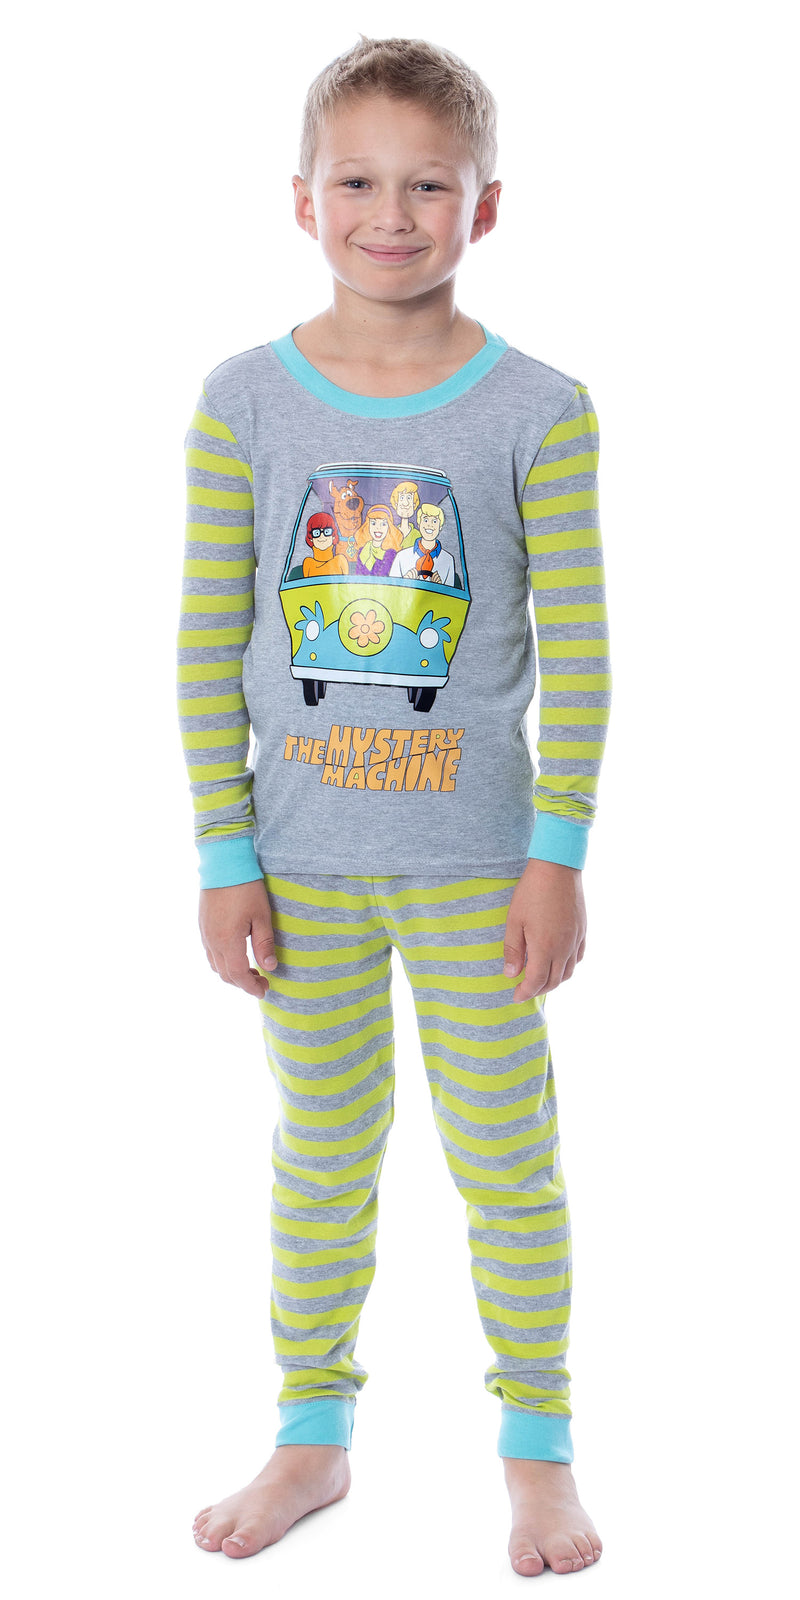 Scooby Doo Boys Big Mystery Machine Pajama Set, Multi, 10